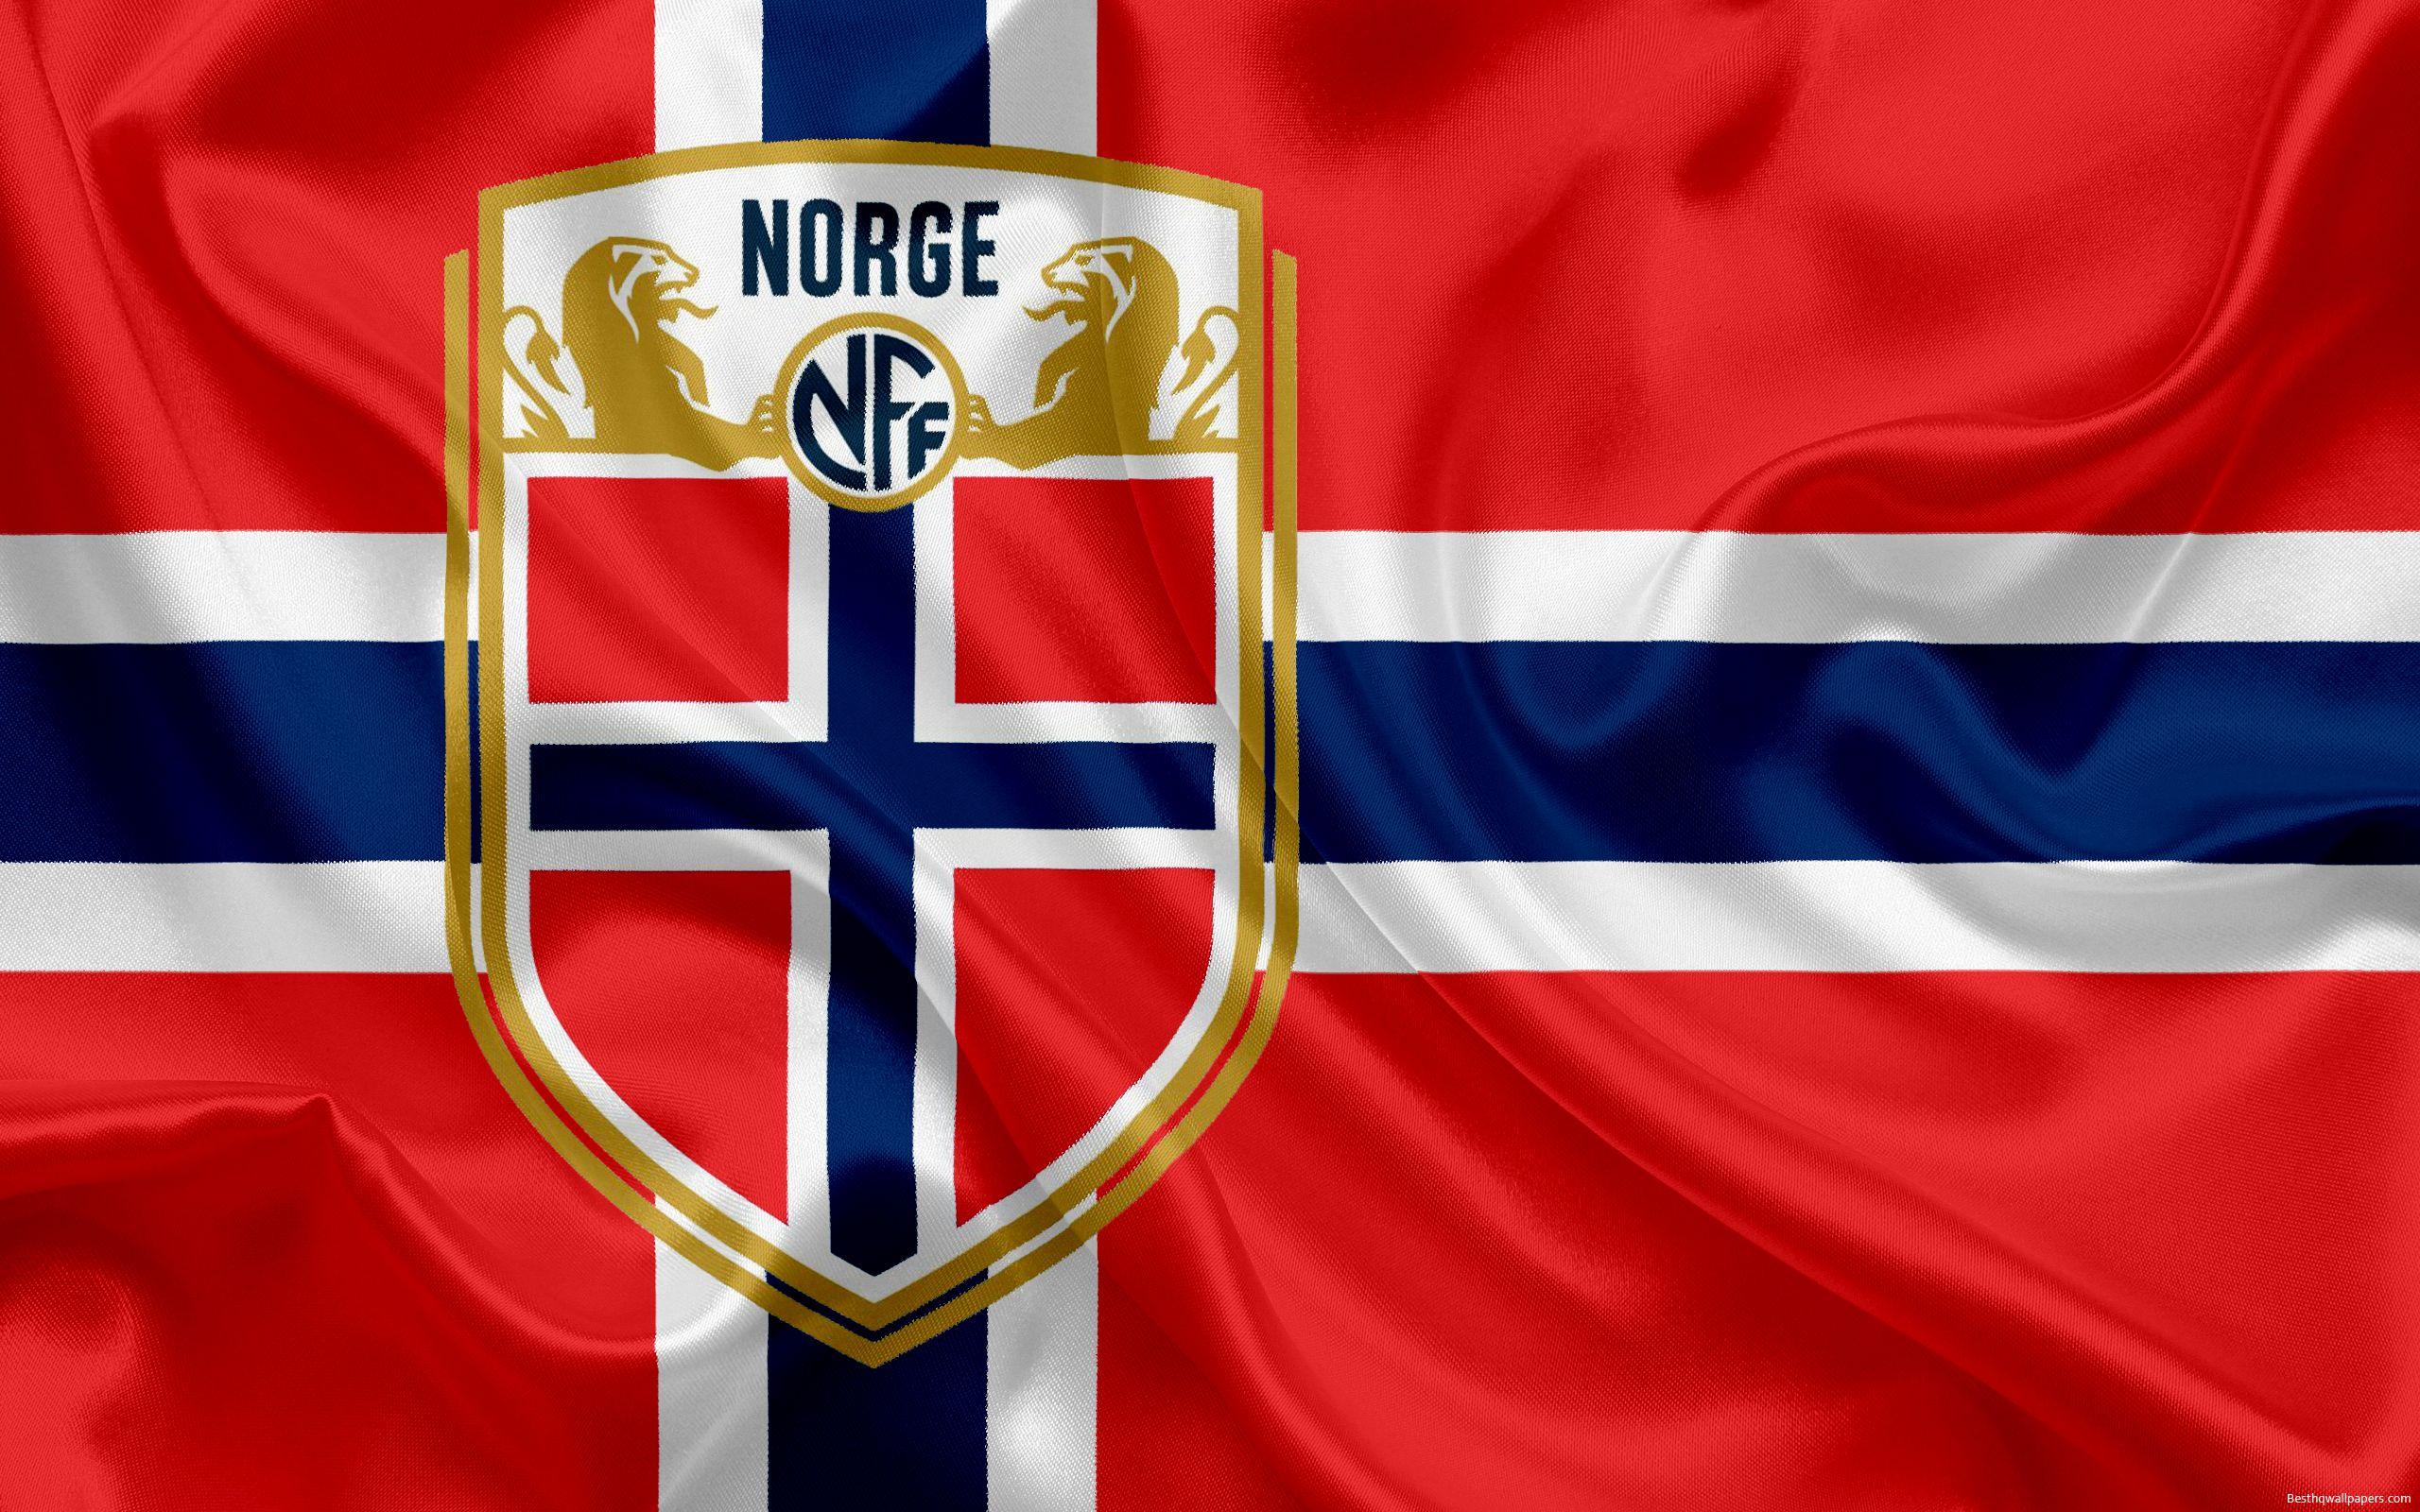 40+ Free Norwegian Flag & Norway Images - Pixabay